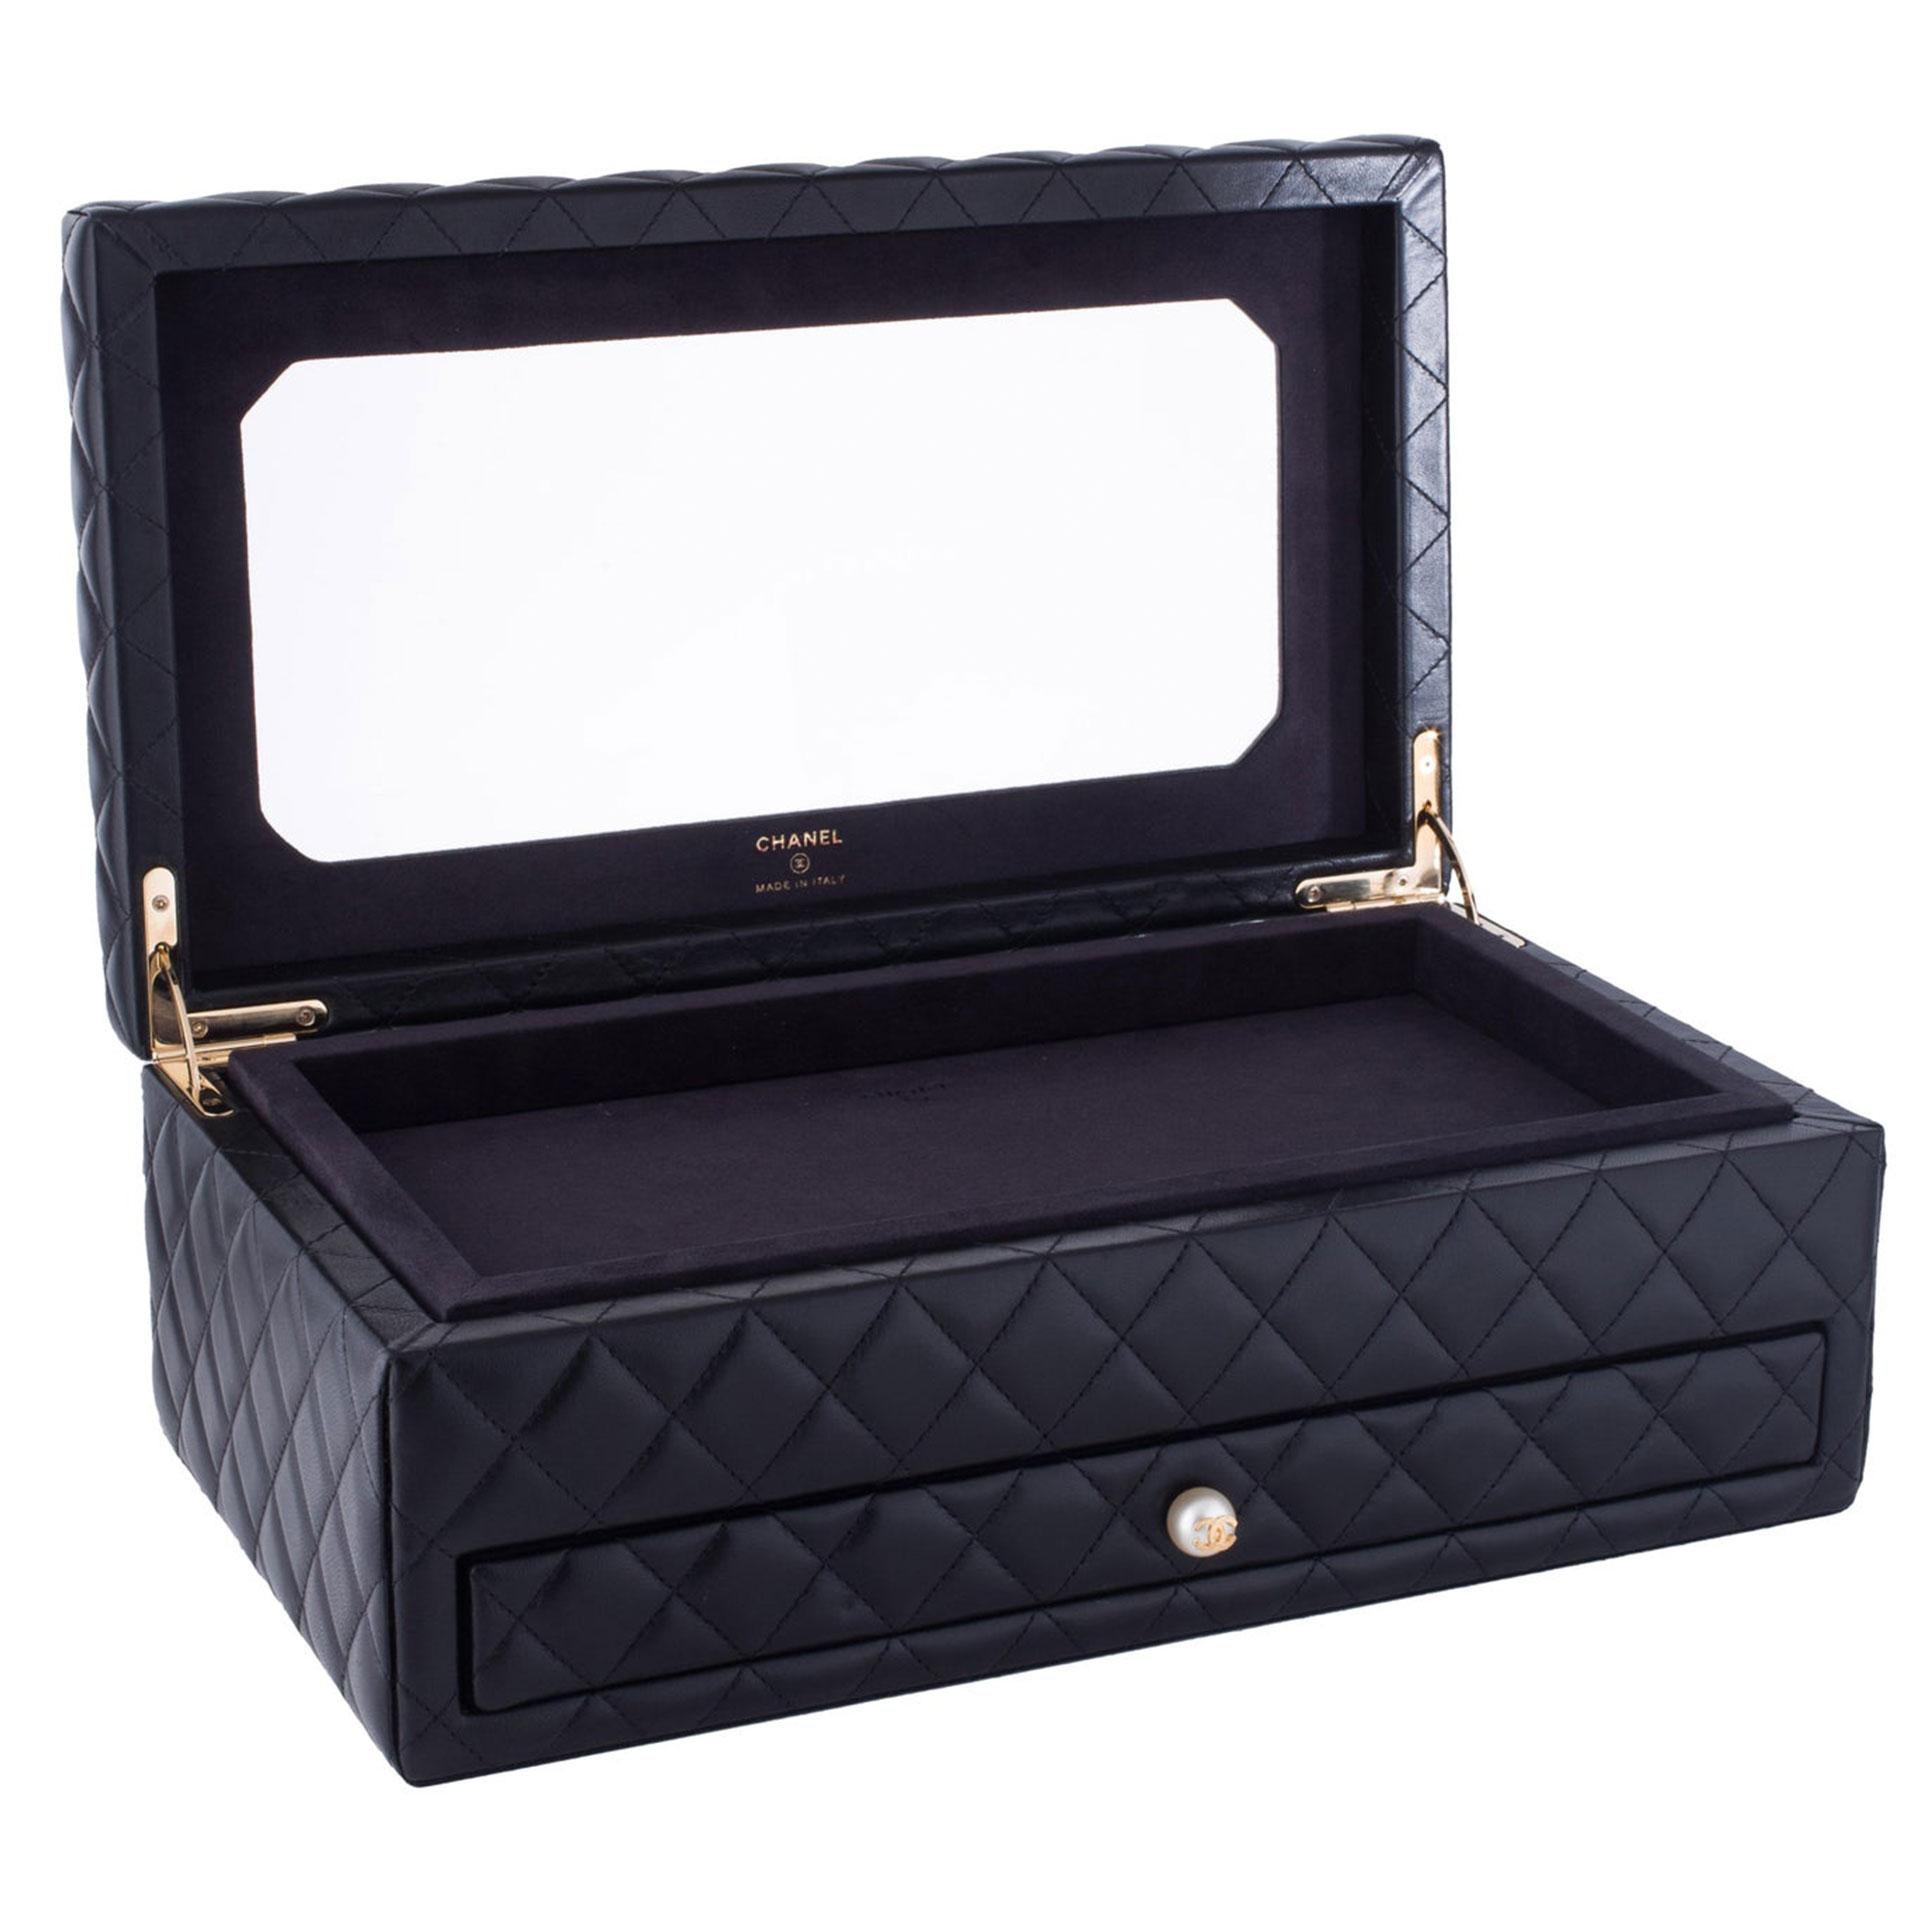 Chanel Black Vanity Case Limited, Jewelry Armoire Vanity